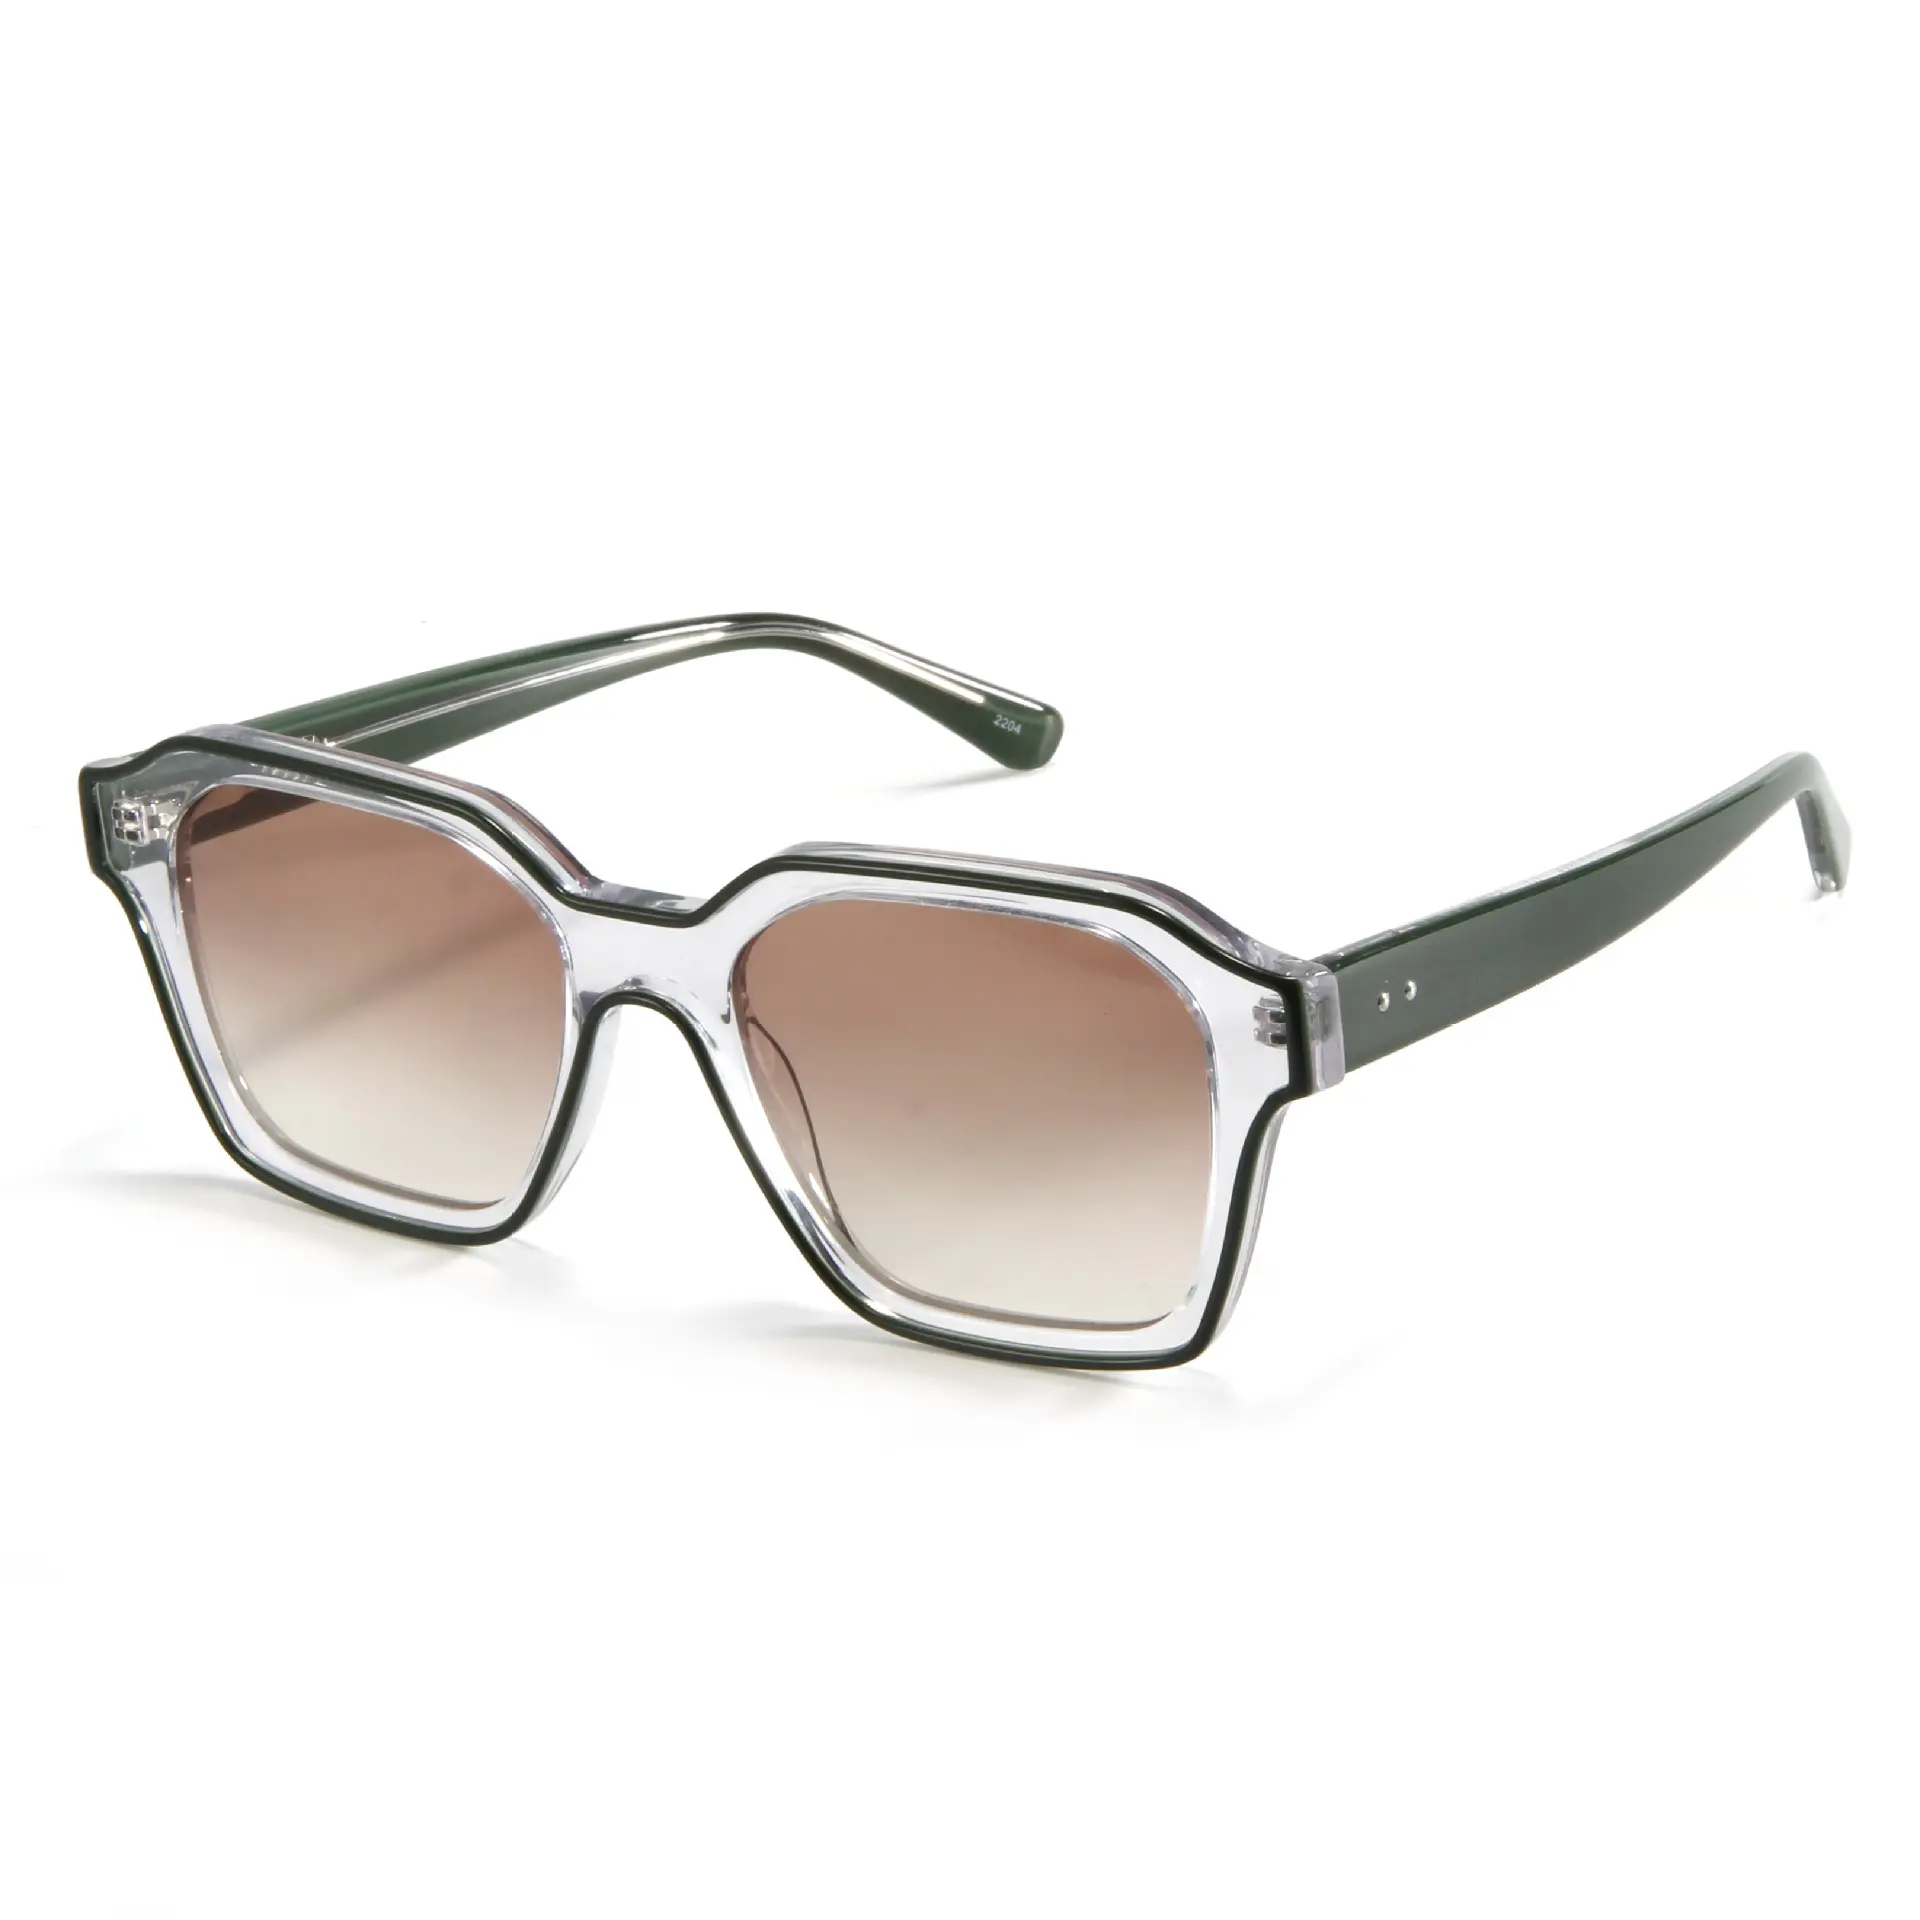 Figroad Sunglasses Wholesale Fashion Luxury Black and White Zebra Pattern Retro M49 Acetate Sunglasses